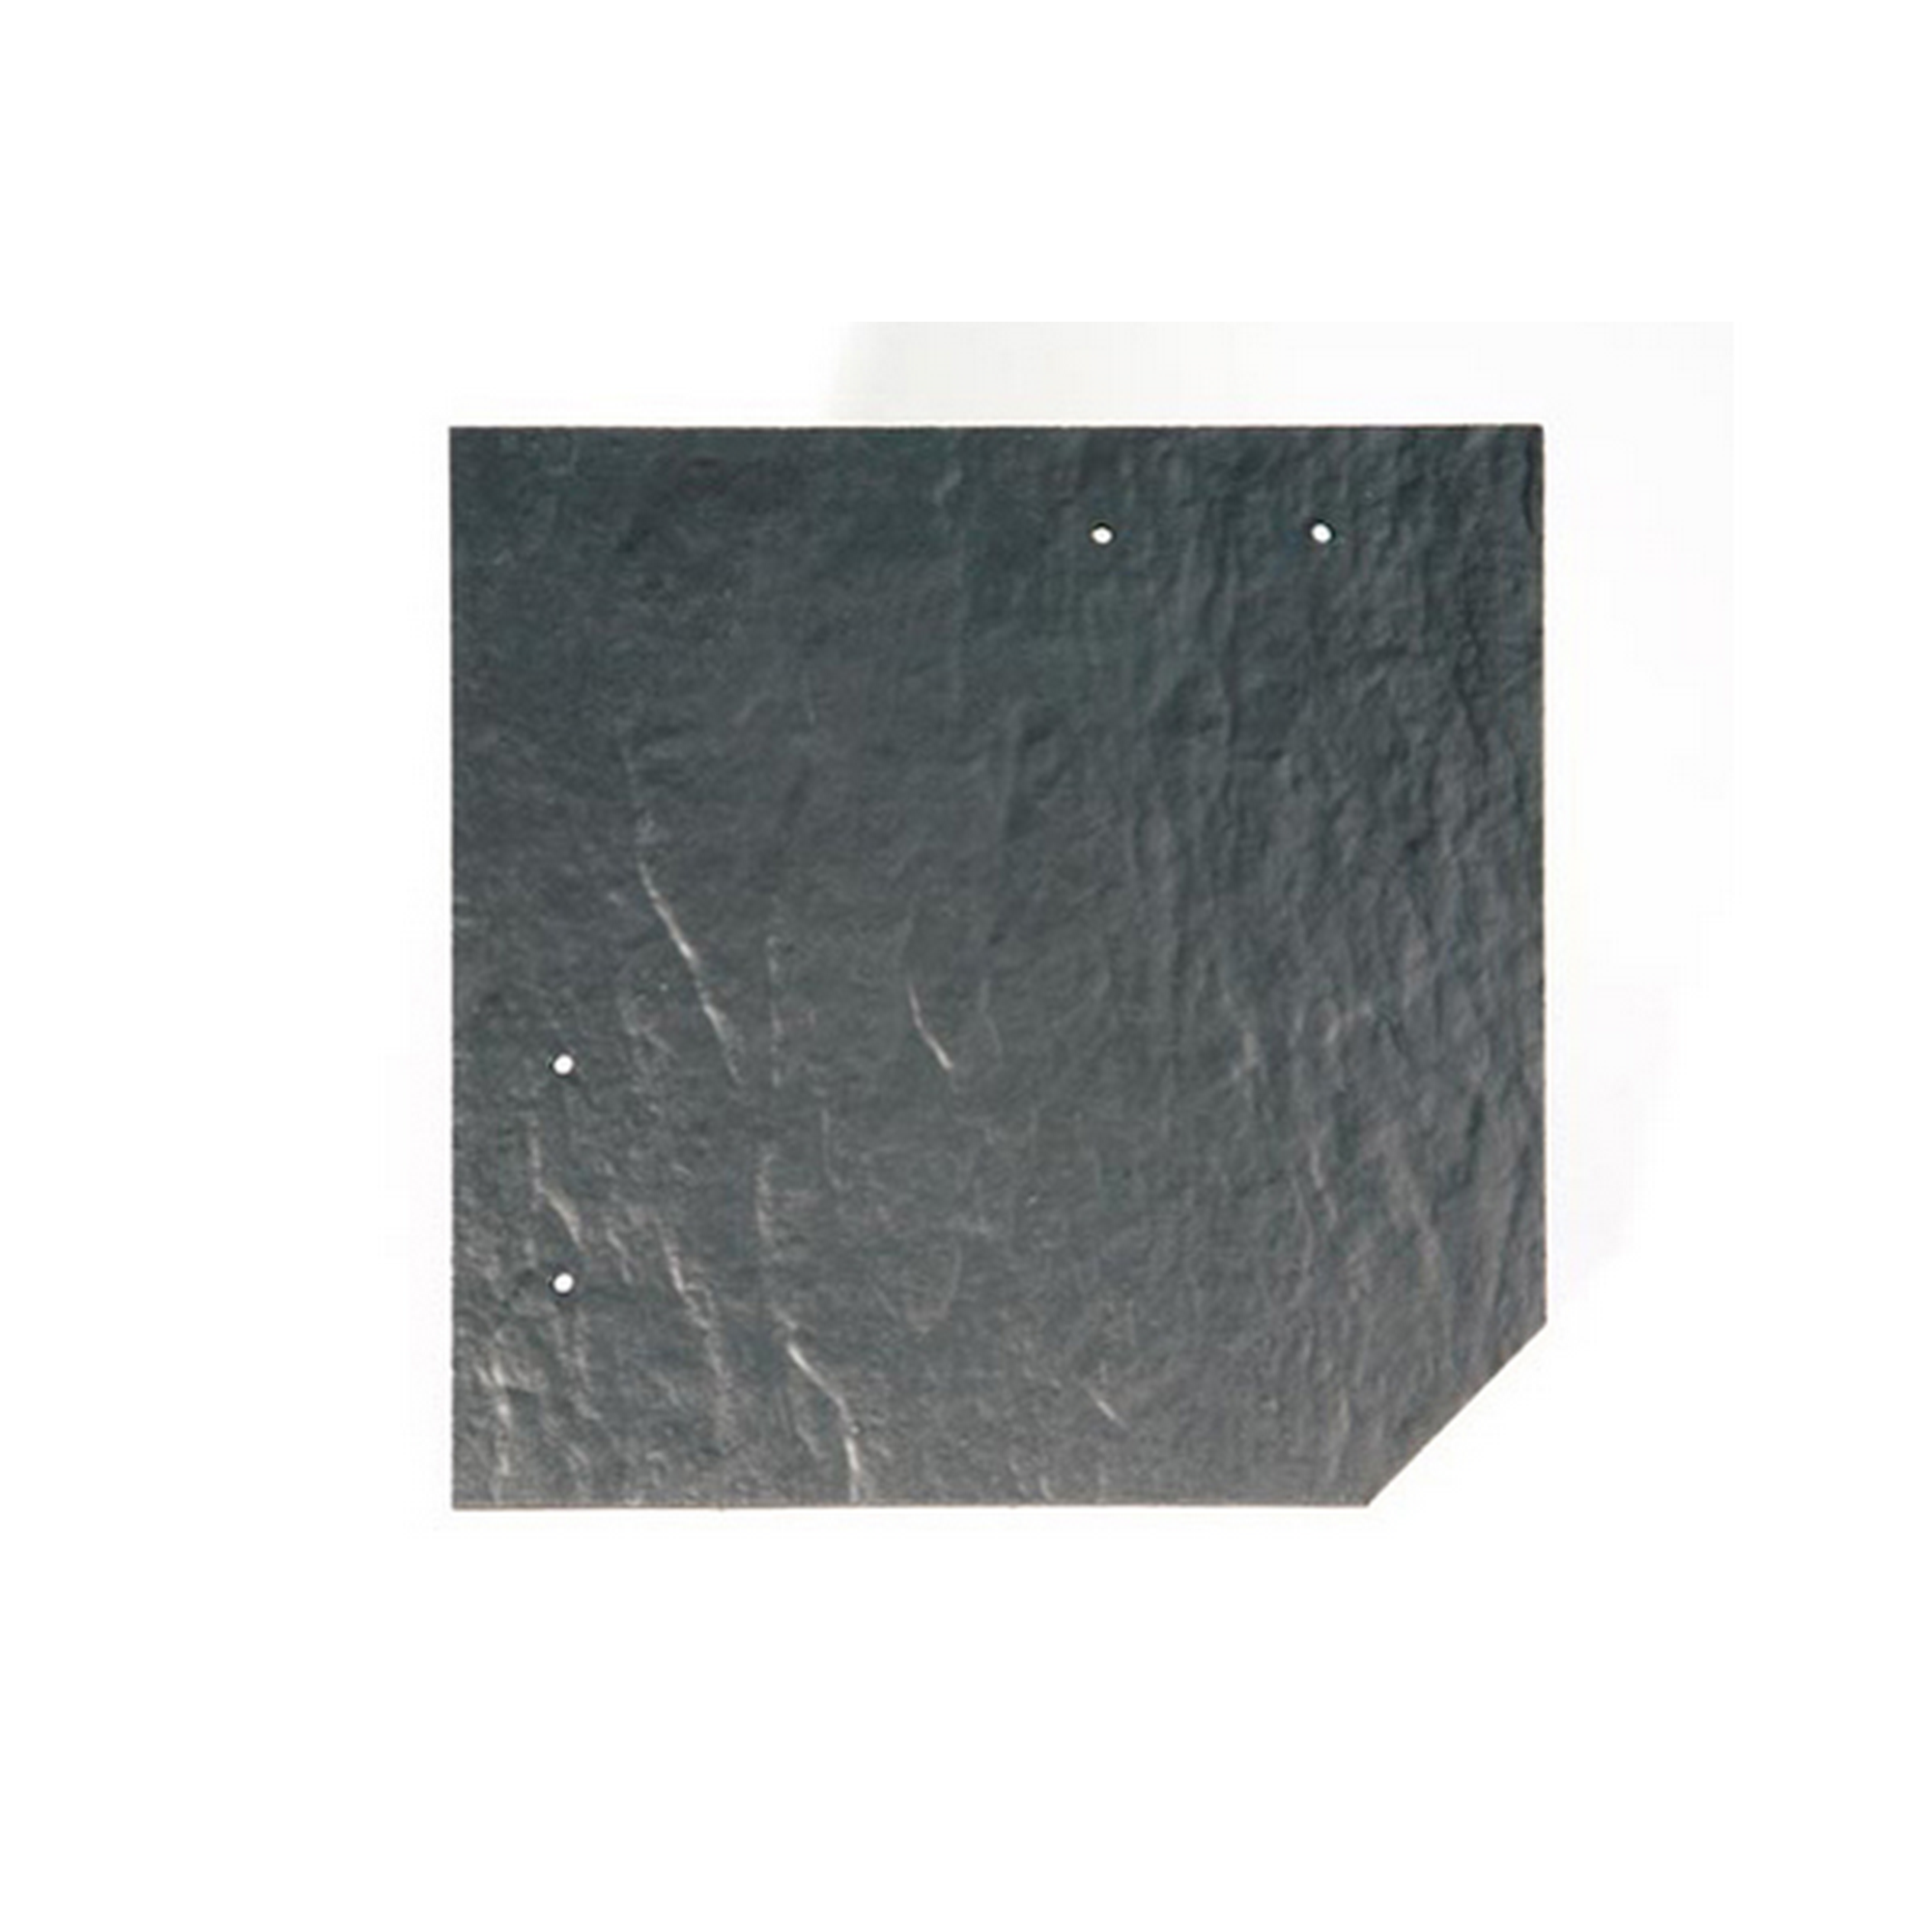 Carport 'Spreewald' schwarze Blende  585 x 893 cm imprägniert + product picture